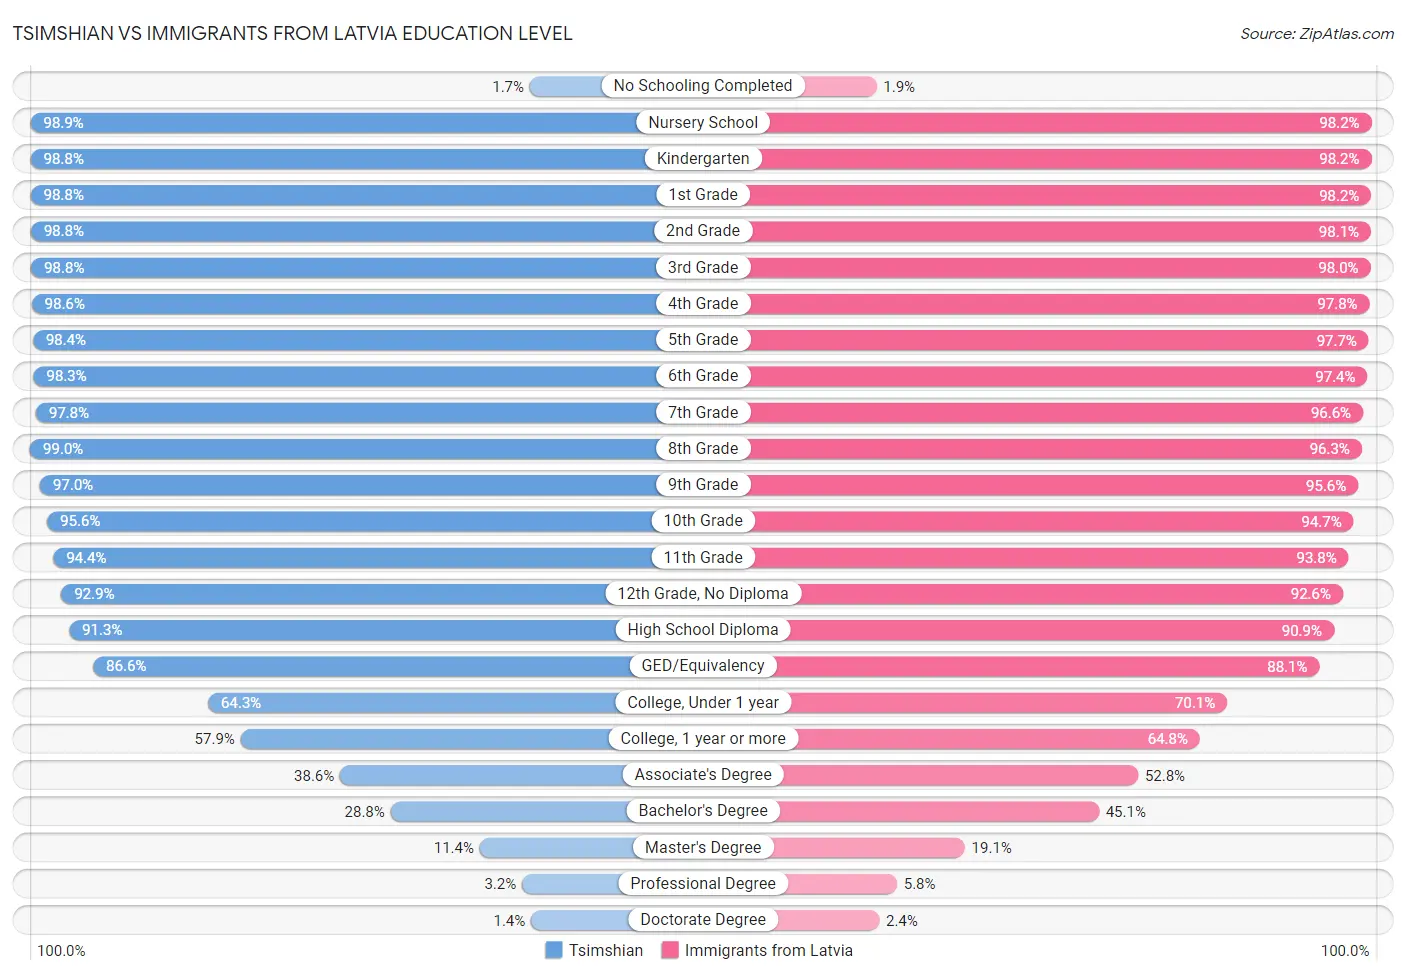 Tsimshian vs Immigrants from Latvia Education Level